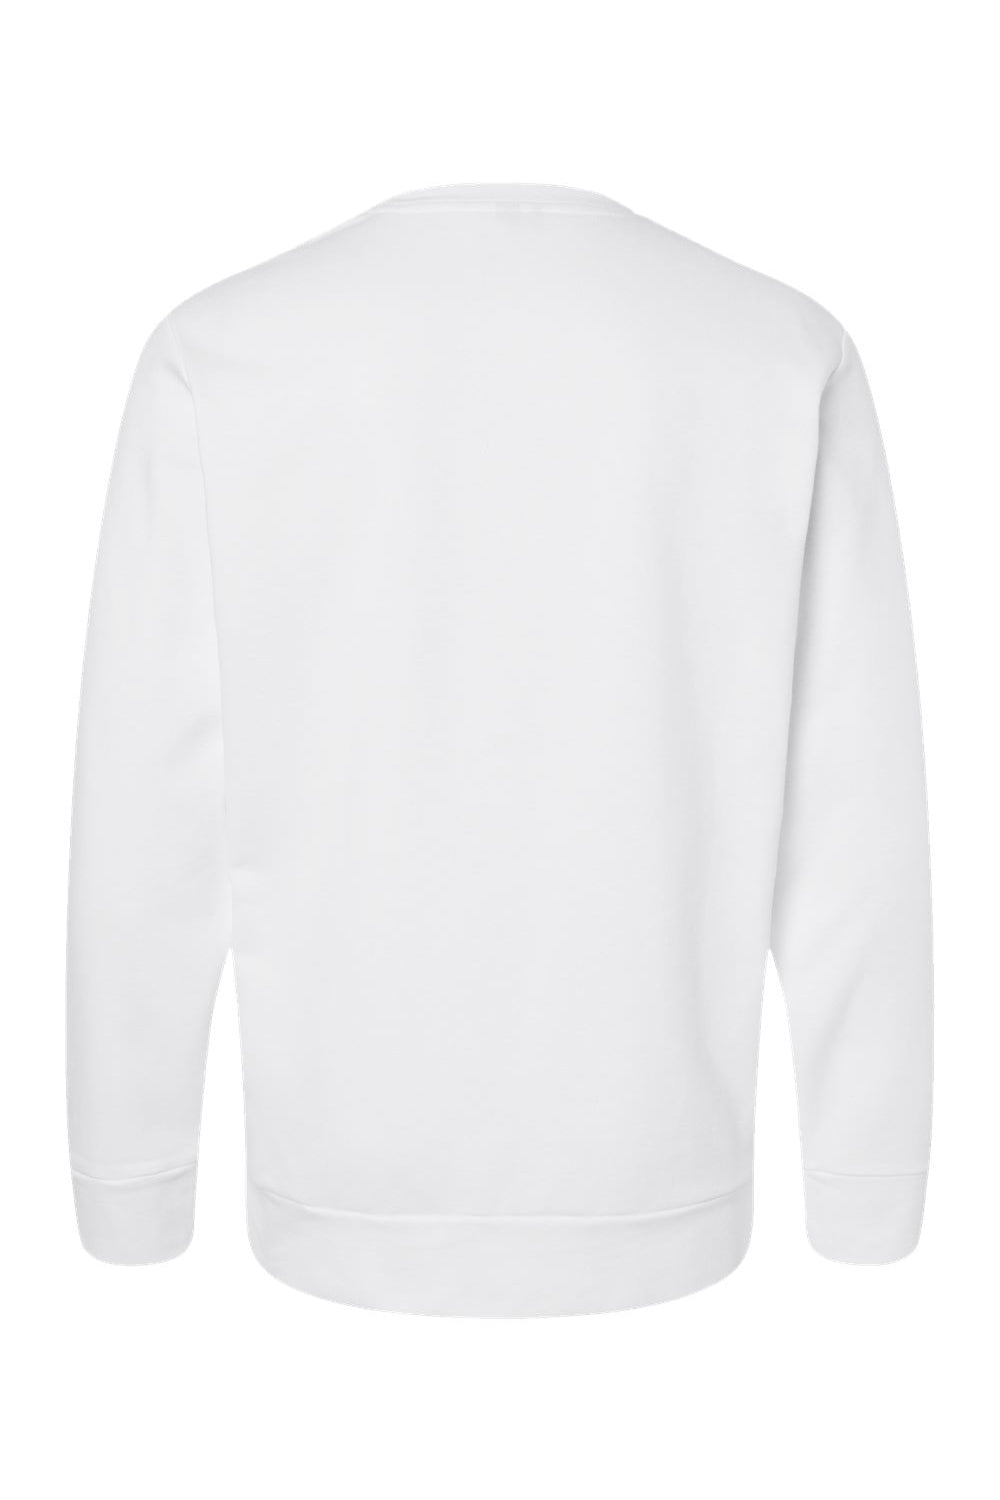 Adidas A434 Mens Fleece Crewneck Sweatshirt White Flat Back